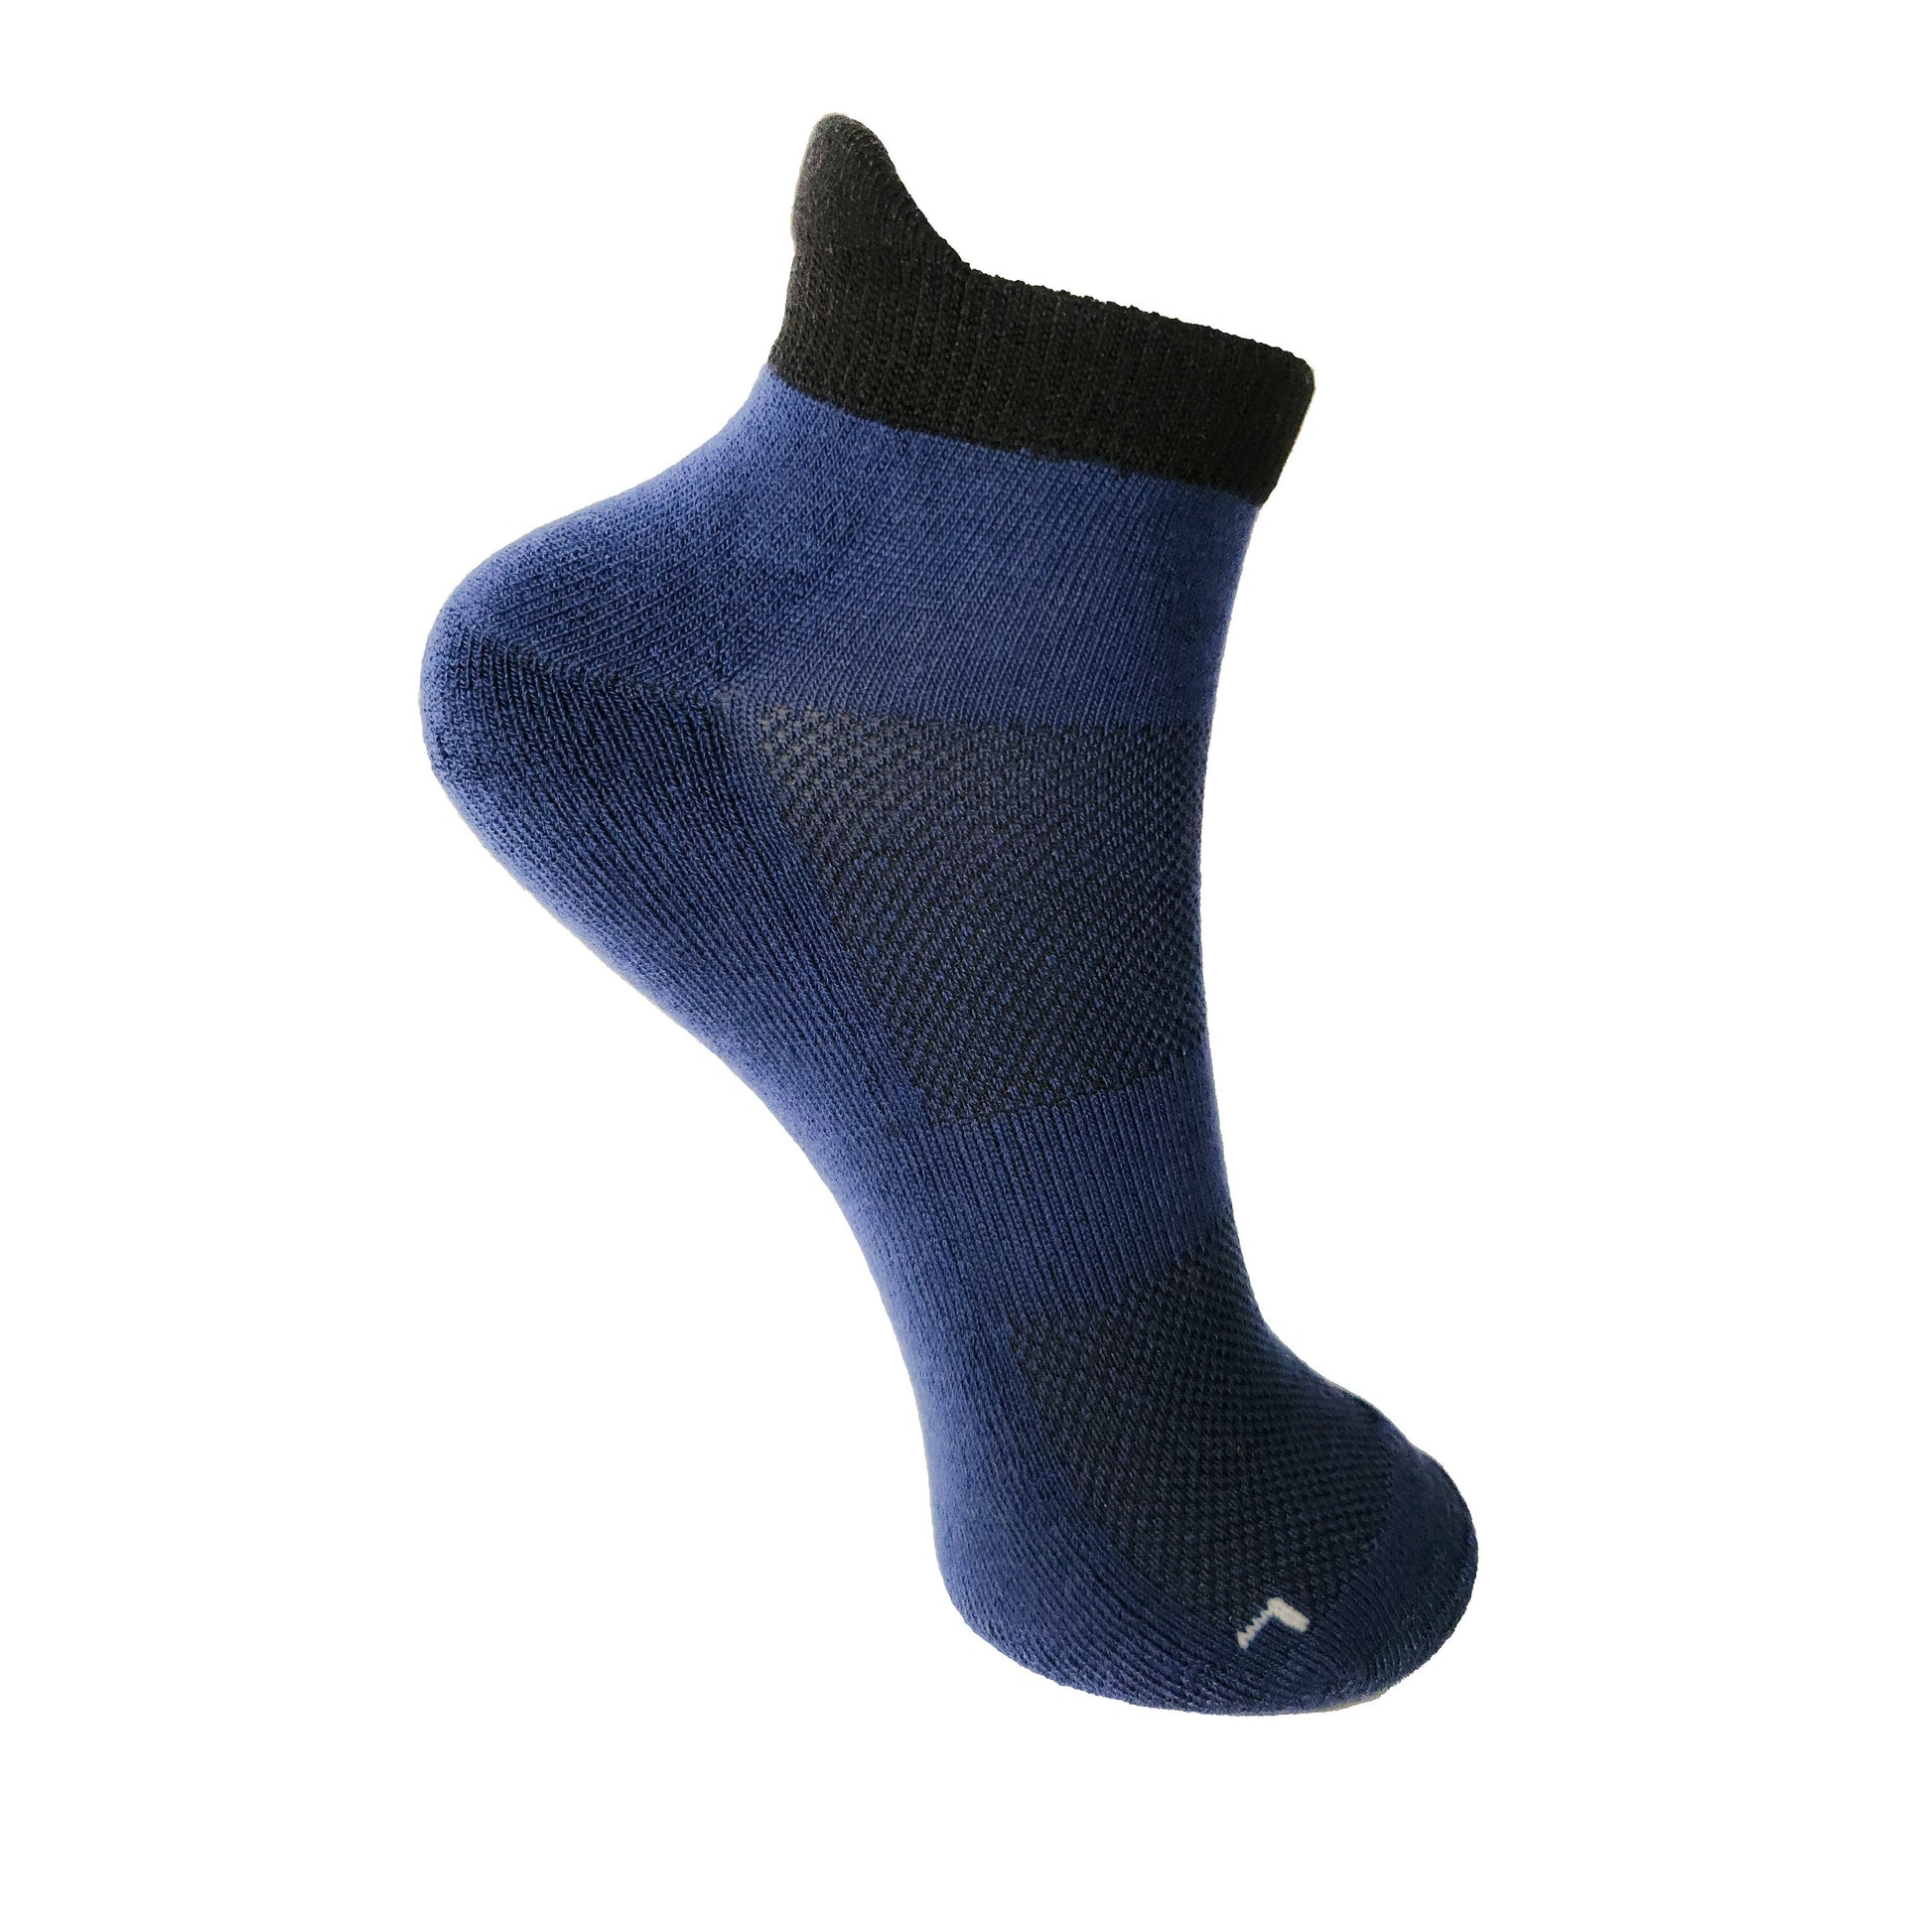 Indigo Ignite (side view of the socks)